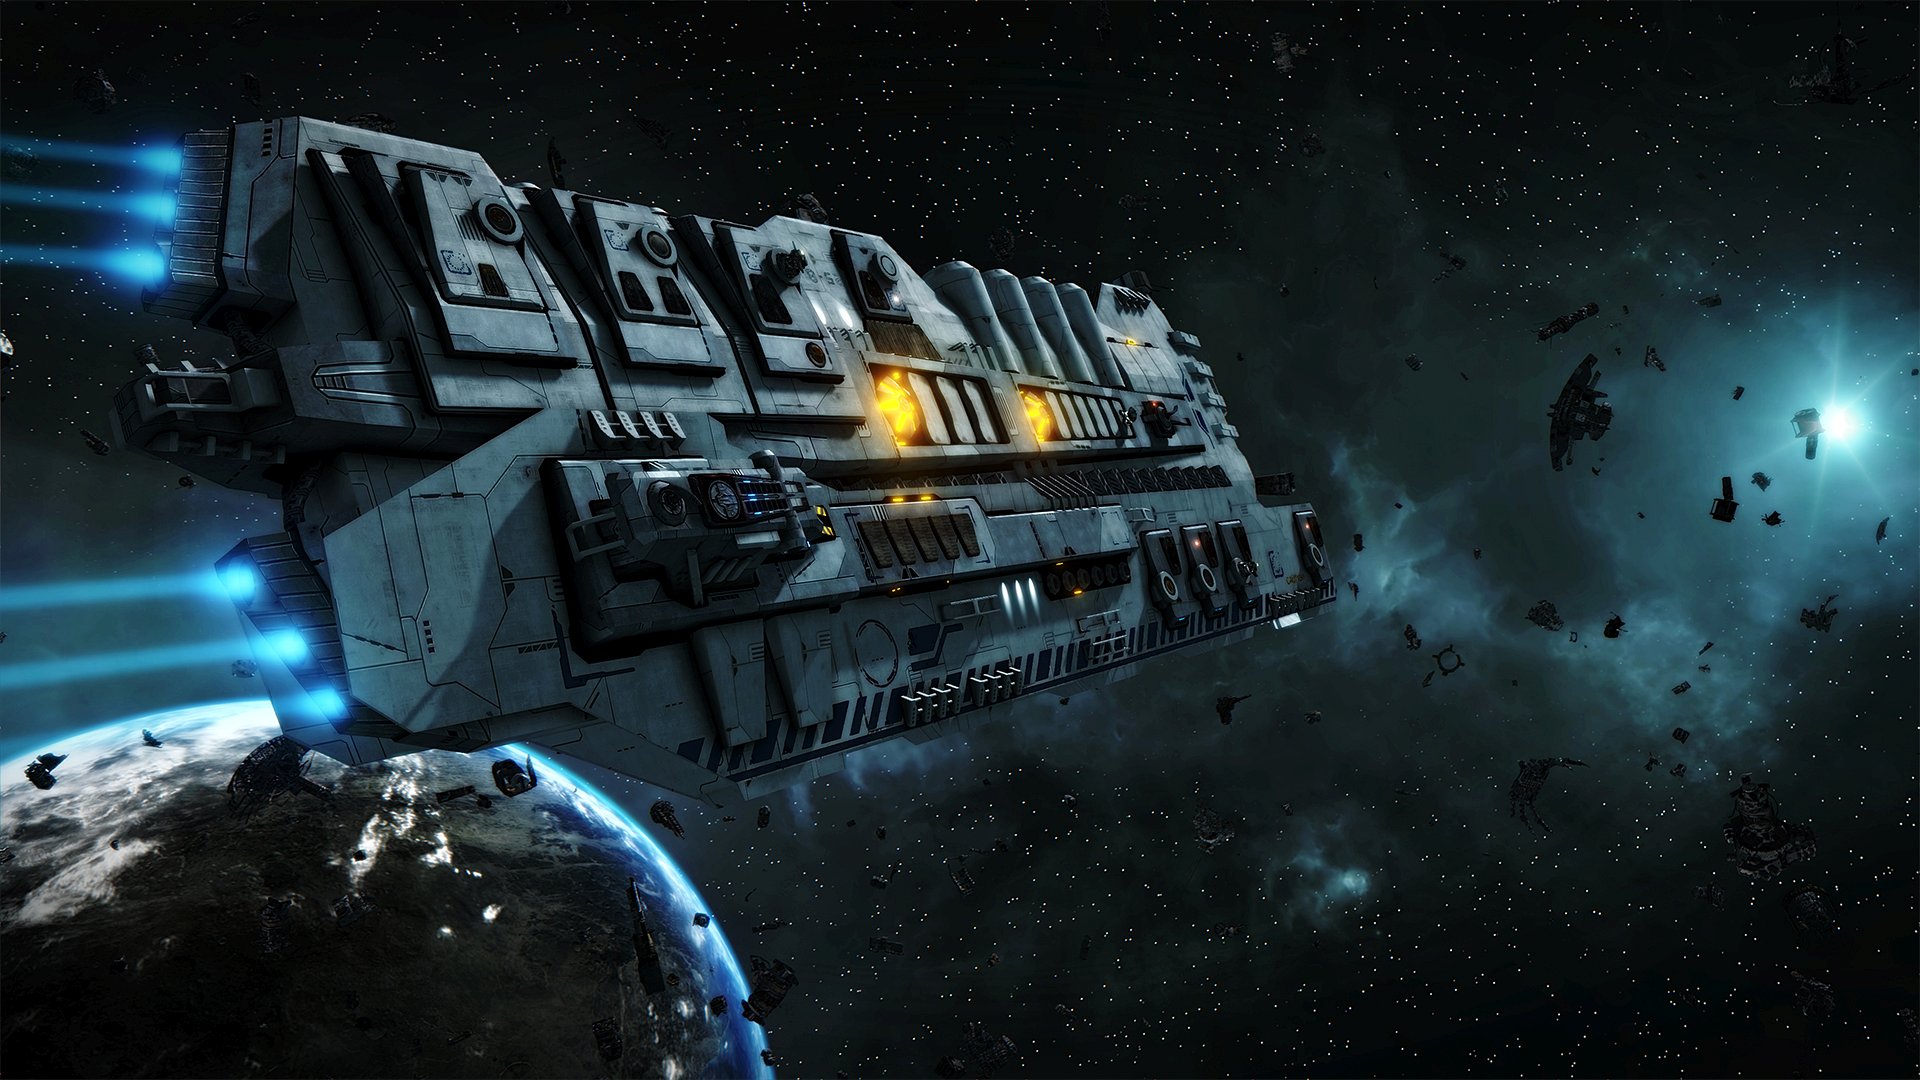 Starpoint Gemini Warlords Screenshot